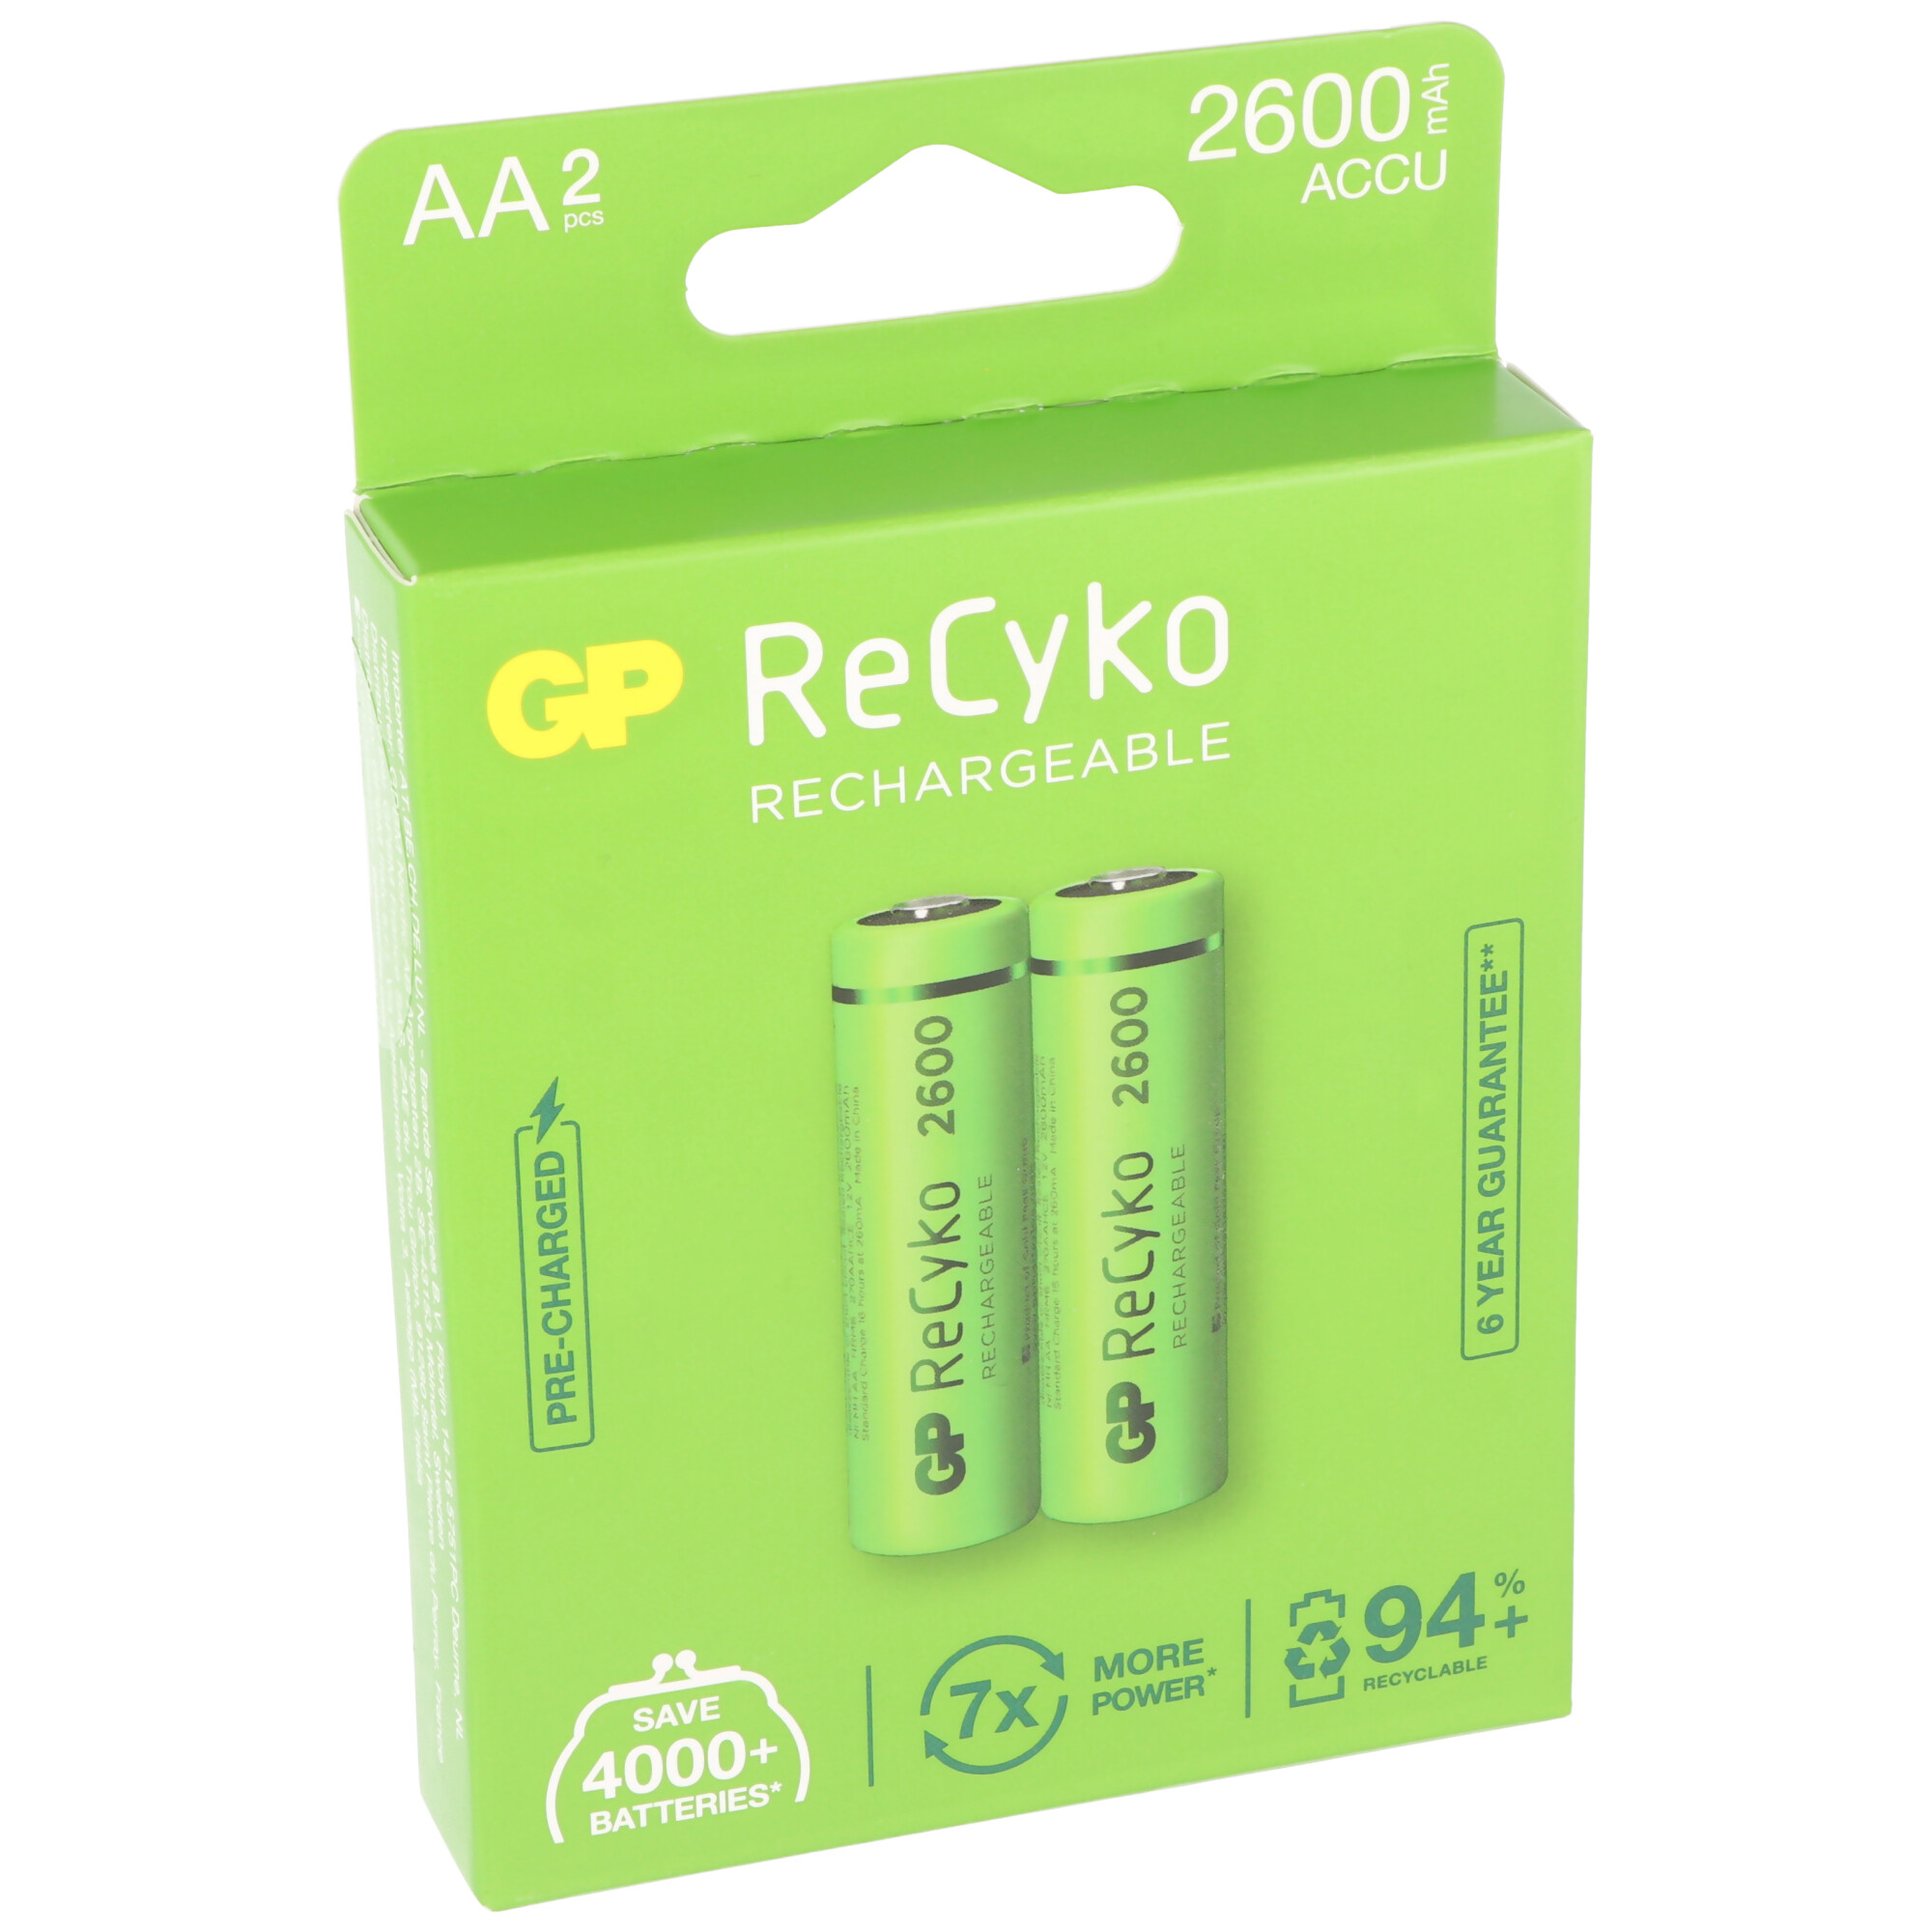 2 pc Pile rechargeable C GP RECYKO+ NiMH/1,2V/3000 mAh